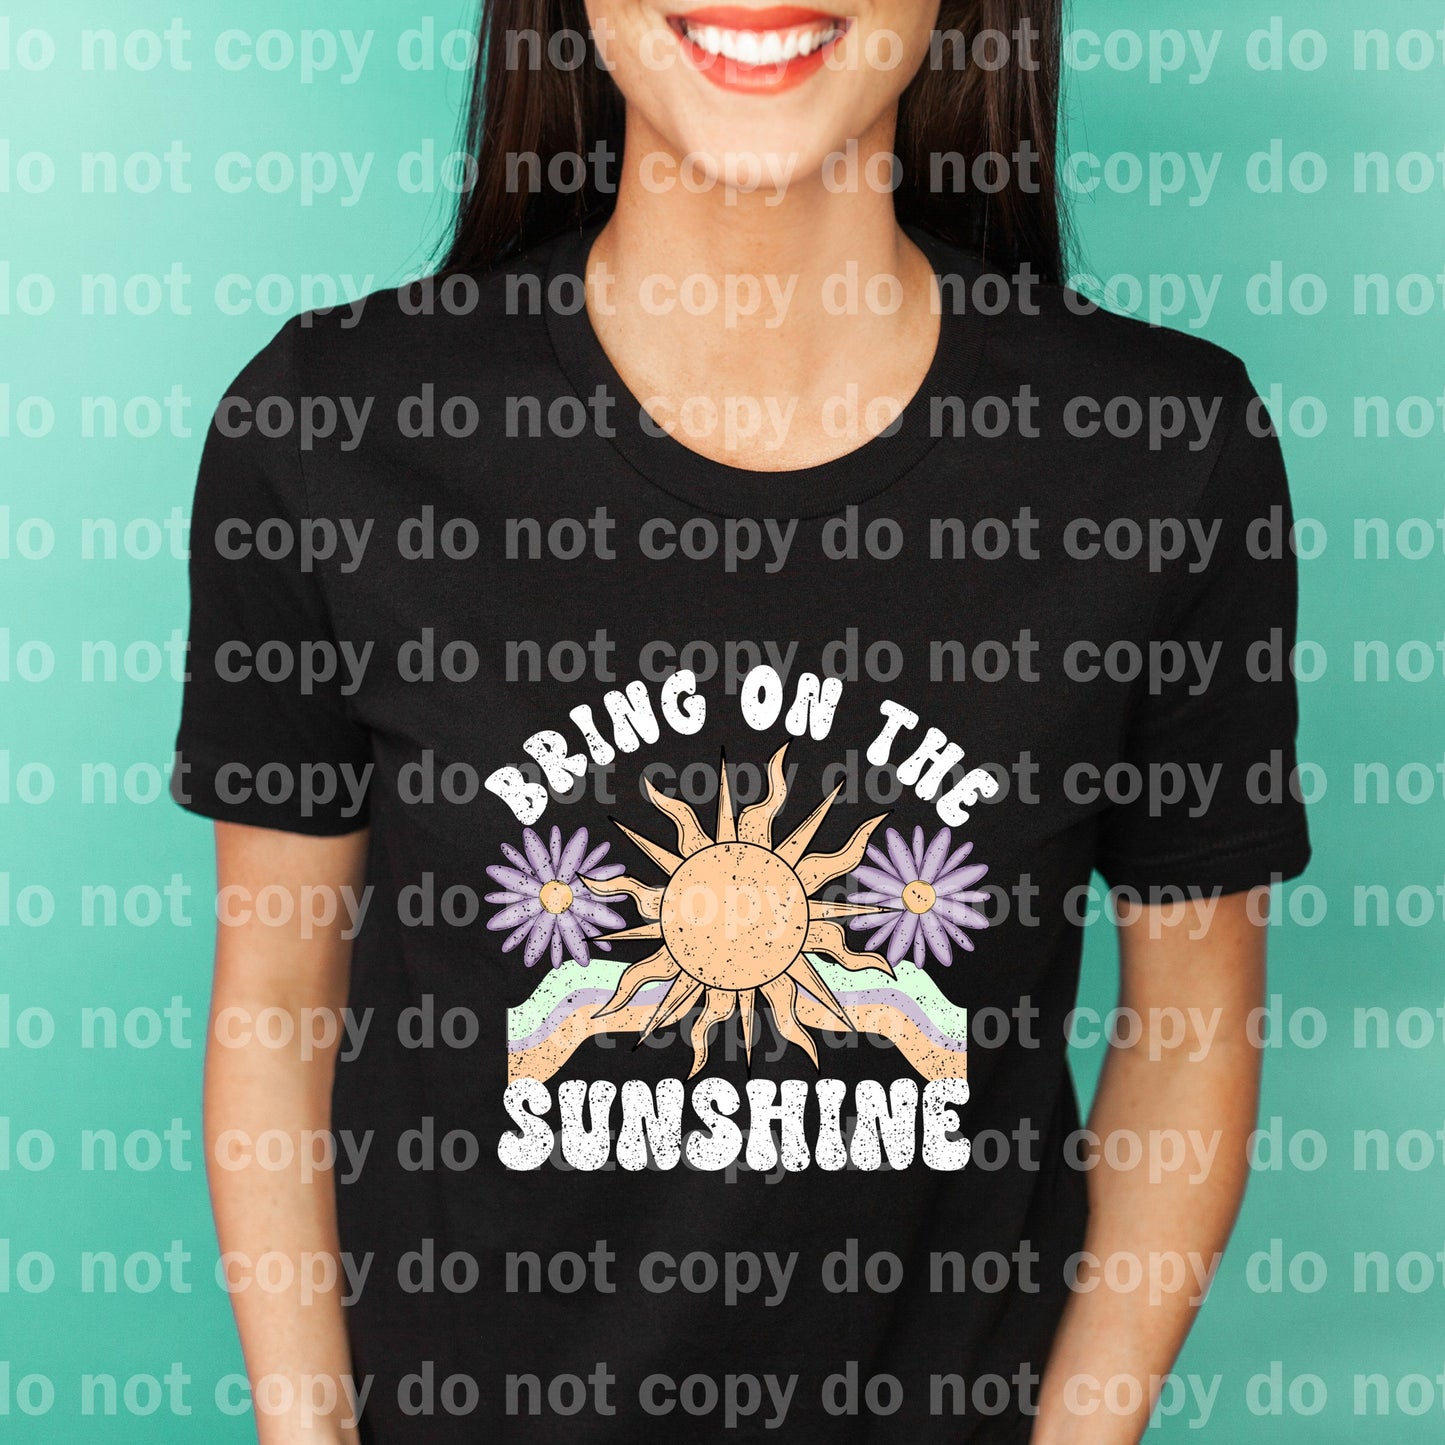 Bring On The Sunshine Black/White Dream Print or Sublimation Print